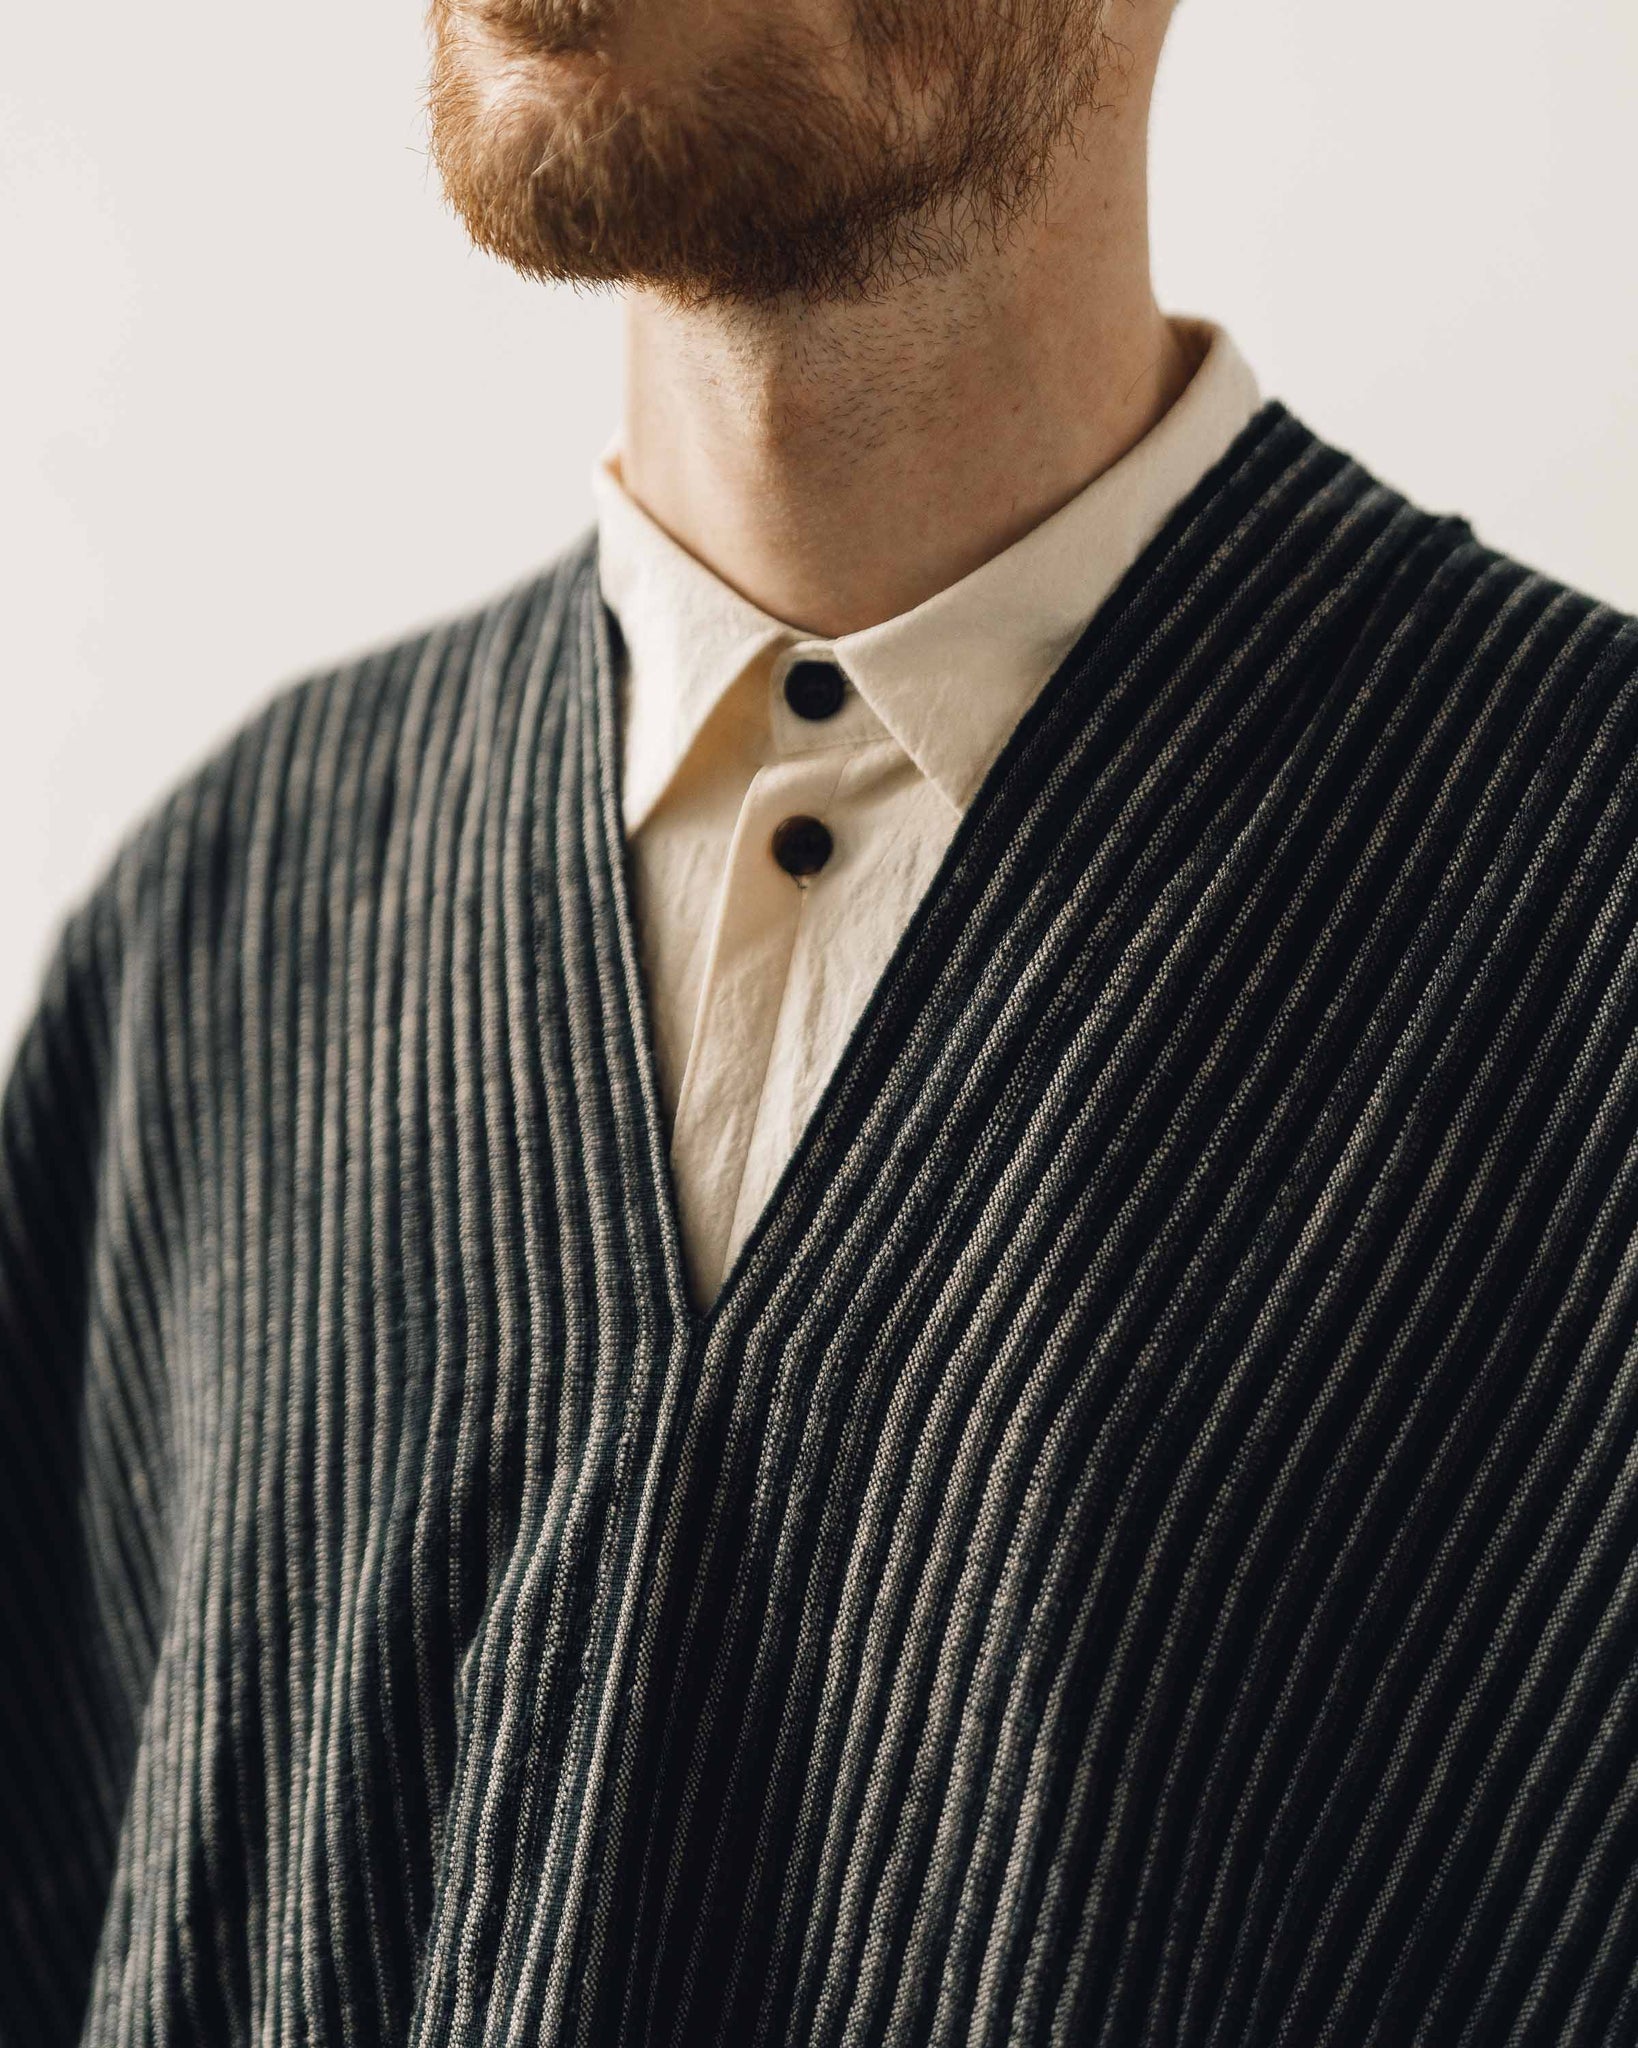 Jan-Jan Van Essche Tunic #26, Striped Organic Cotton Cloth